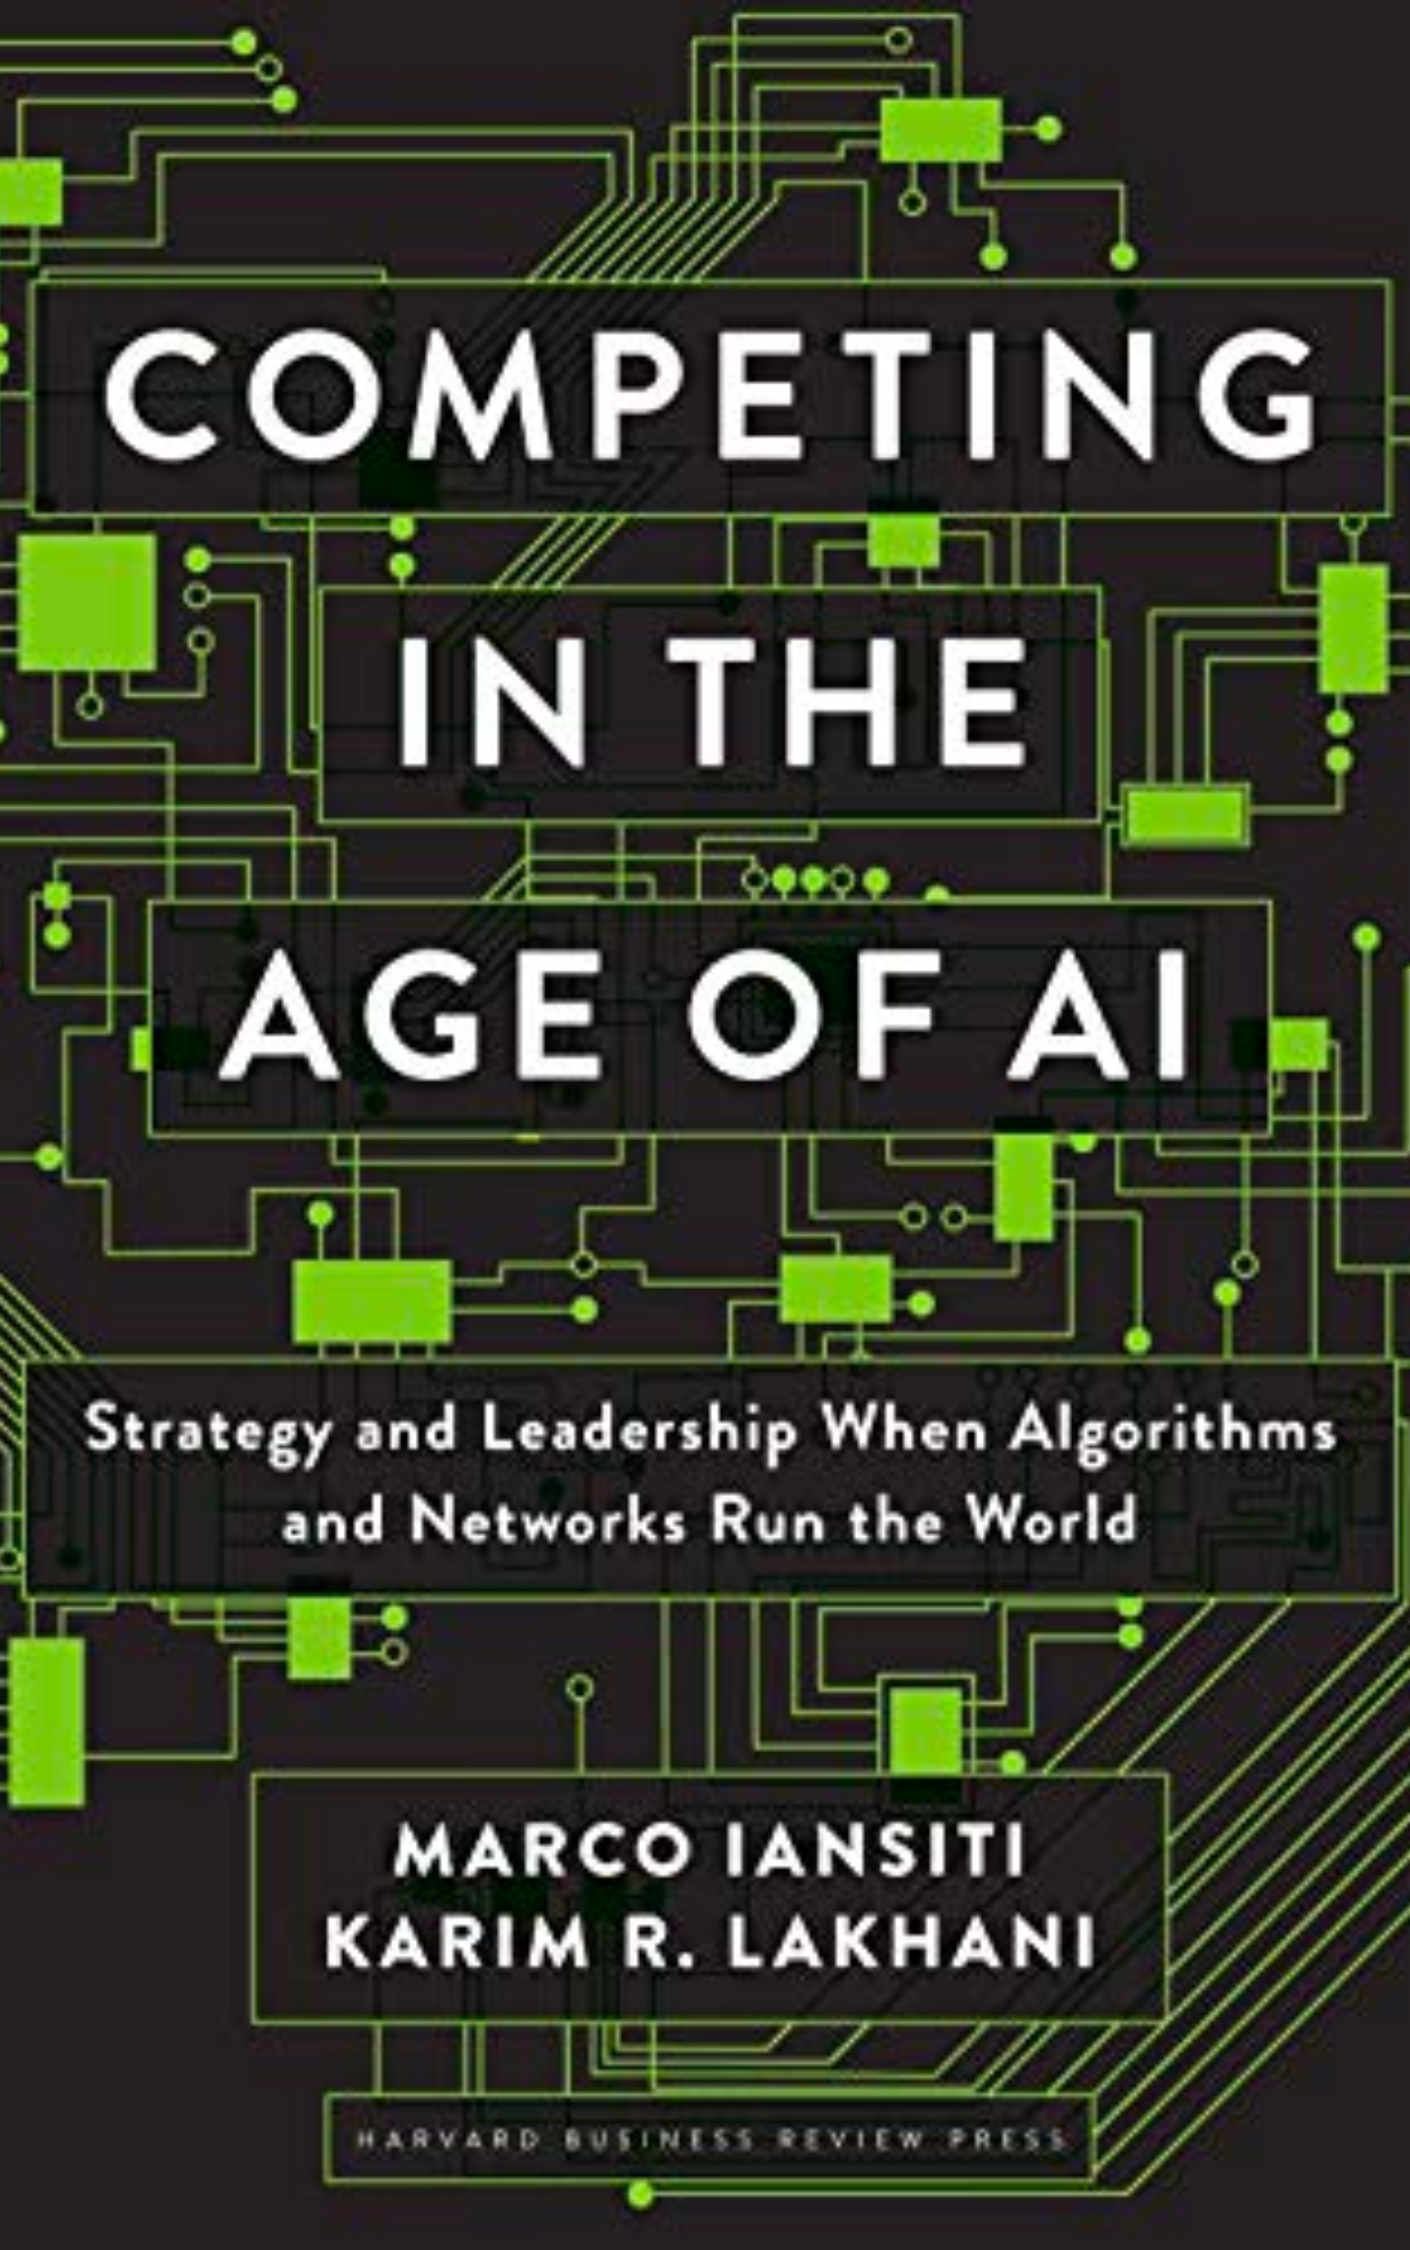 Iansiti, Lakhani - Competing in the Age of AI